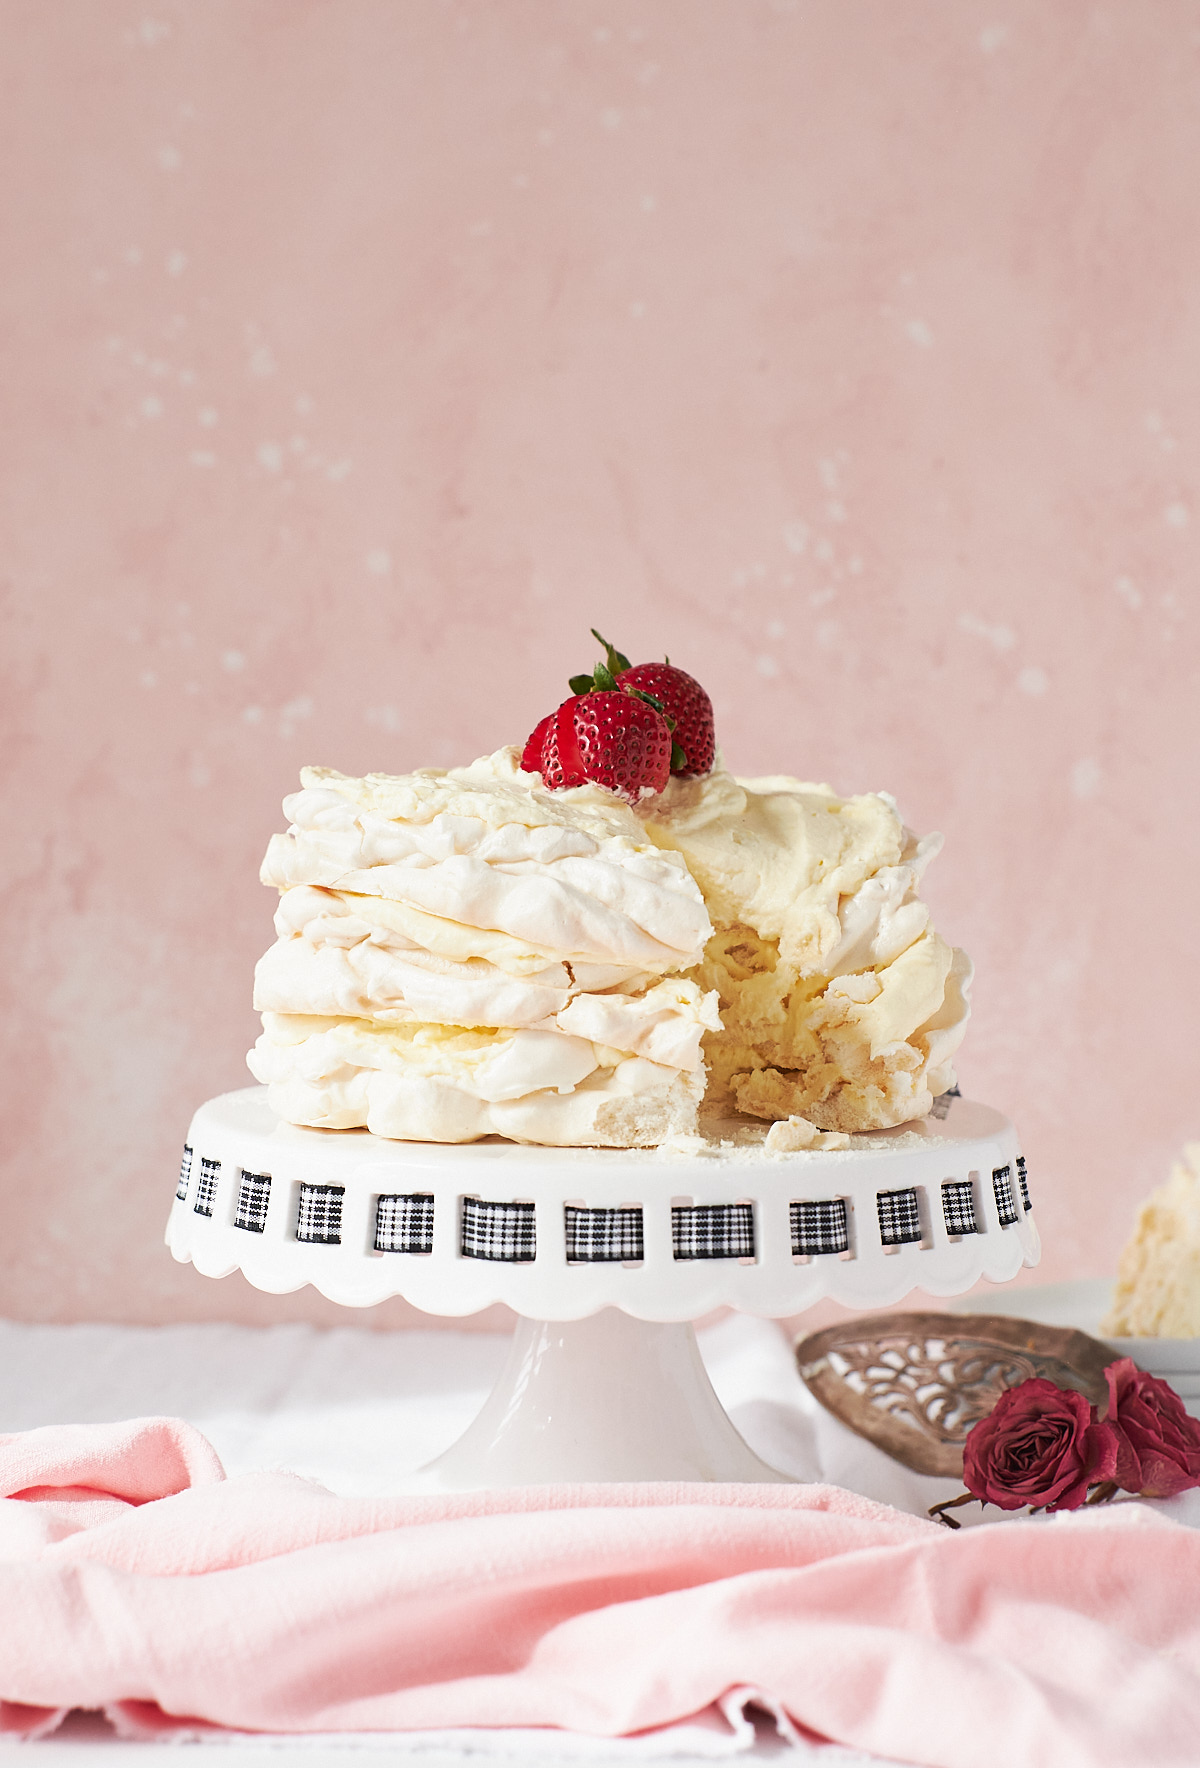 Sweet & Tart Lemon Meringue Pie Cake - XO, Katie Rosario